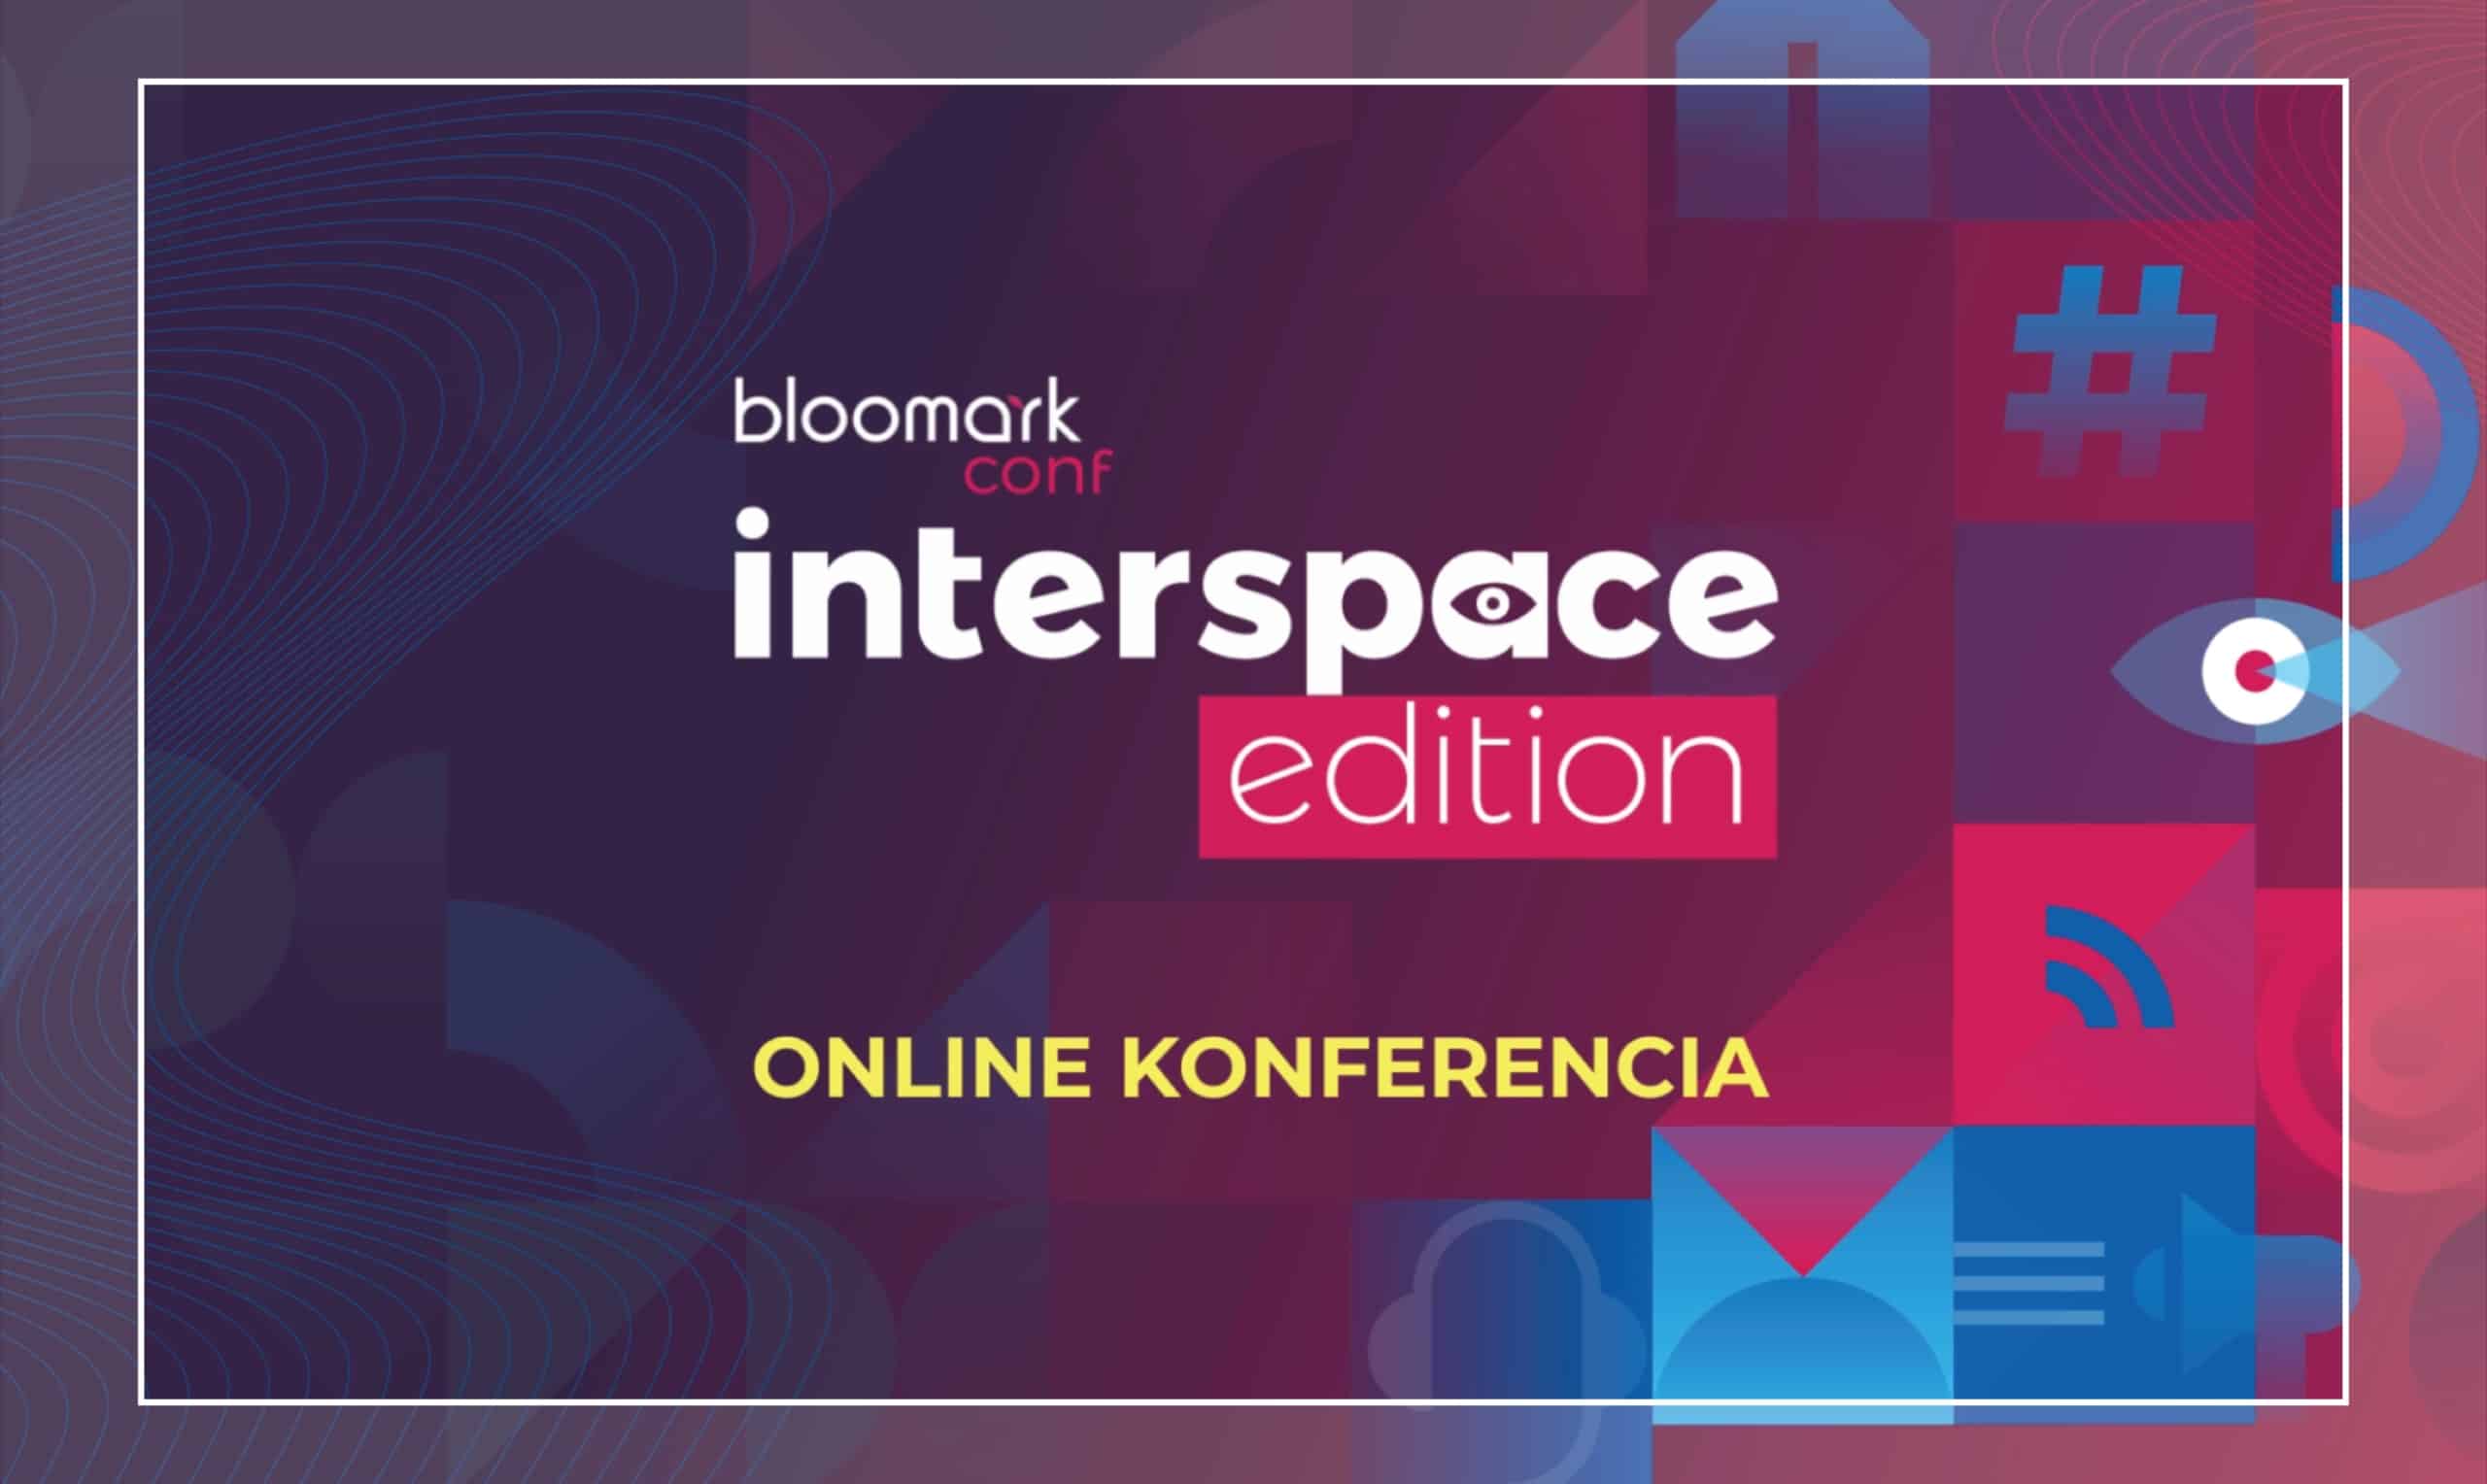 mlv.sk-videostreaming-bloomark-virtualna-konferencia-interspace-edition